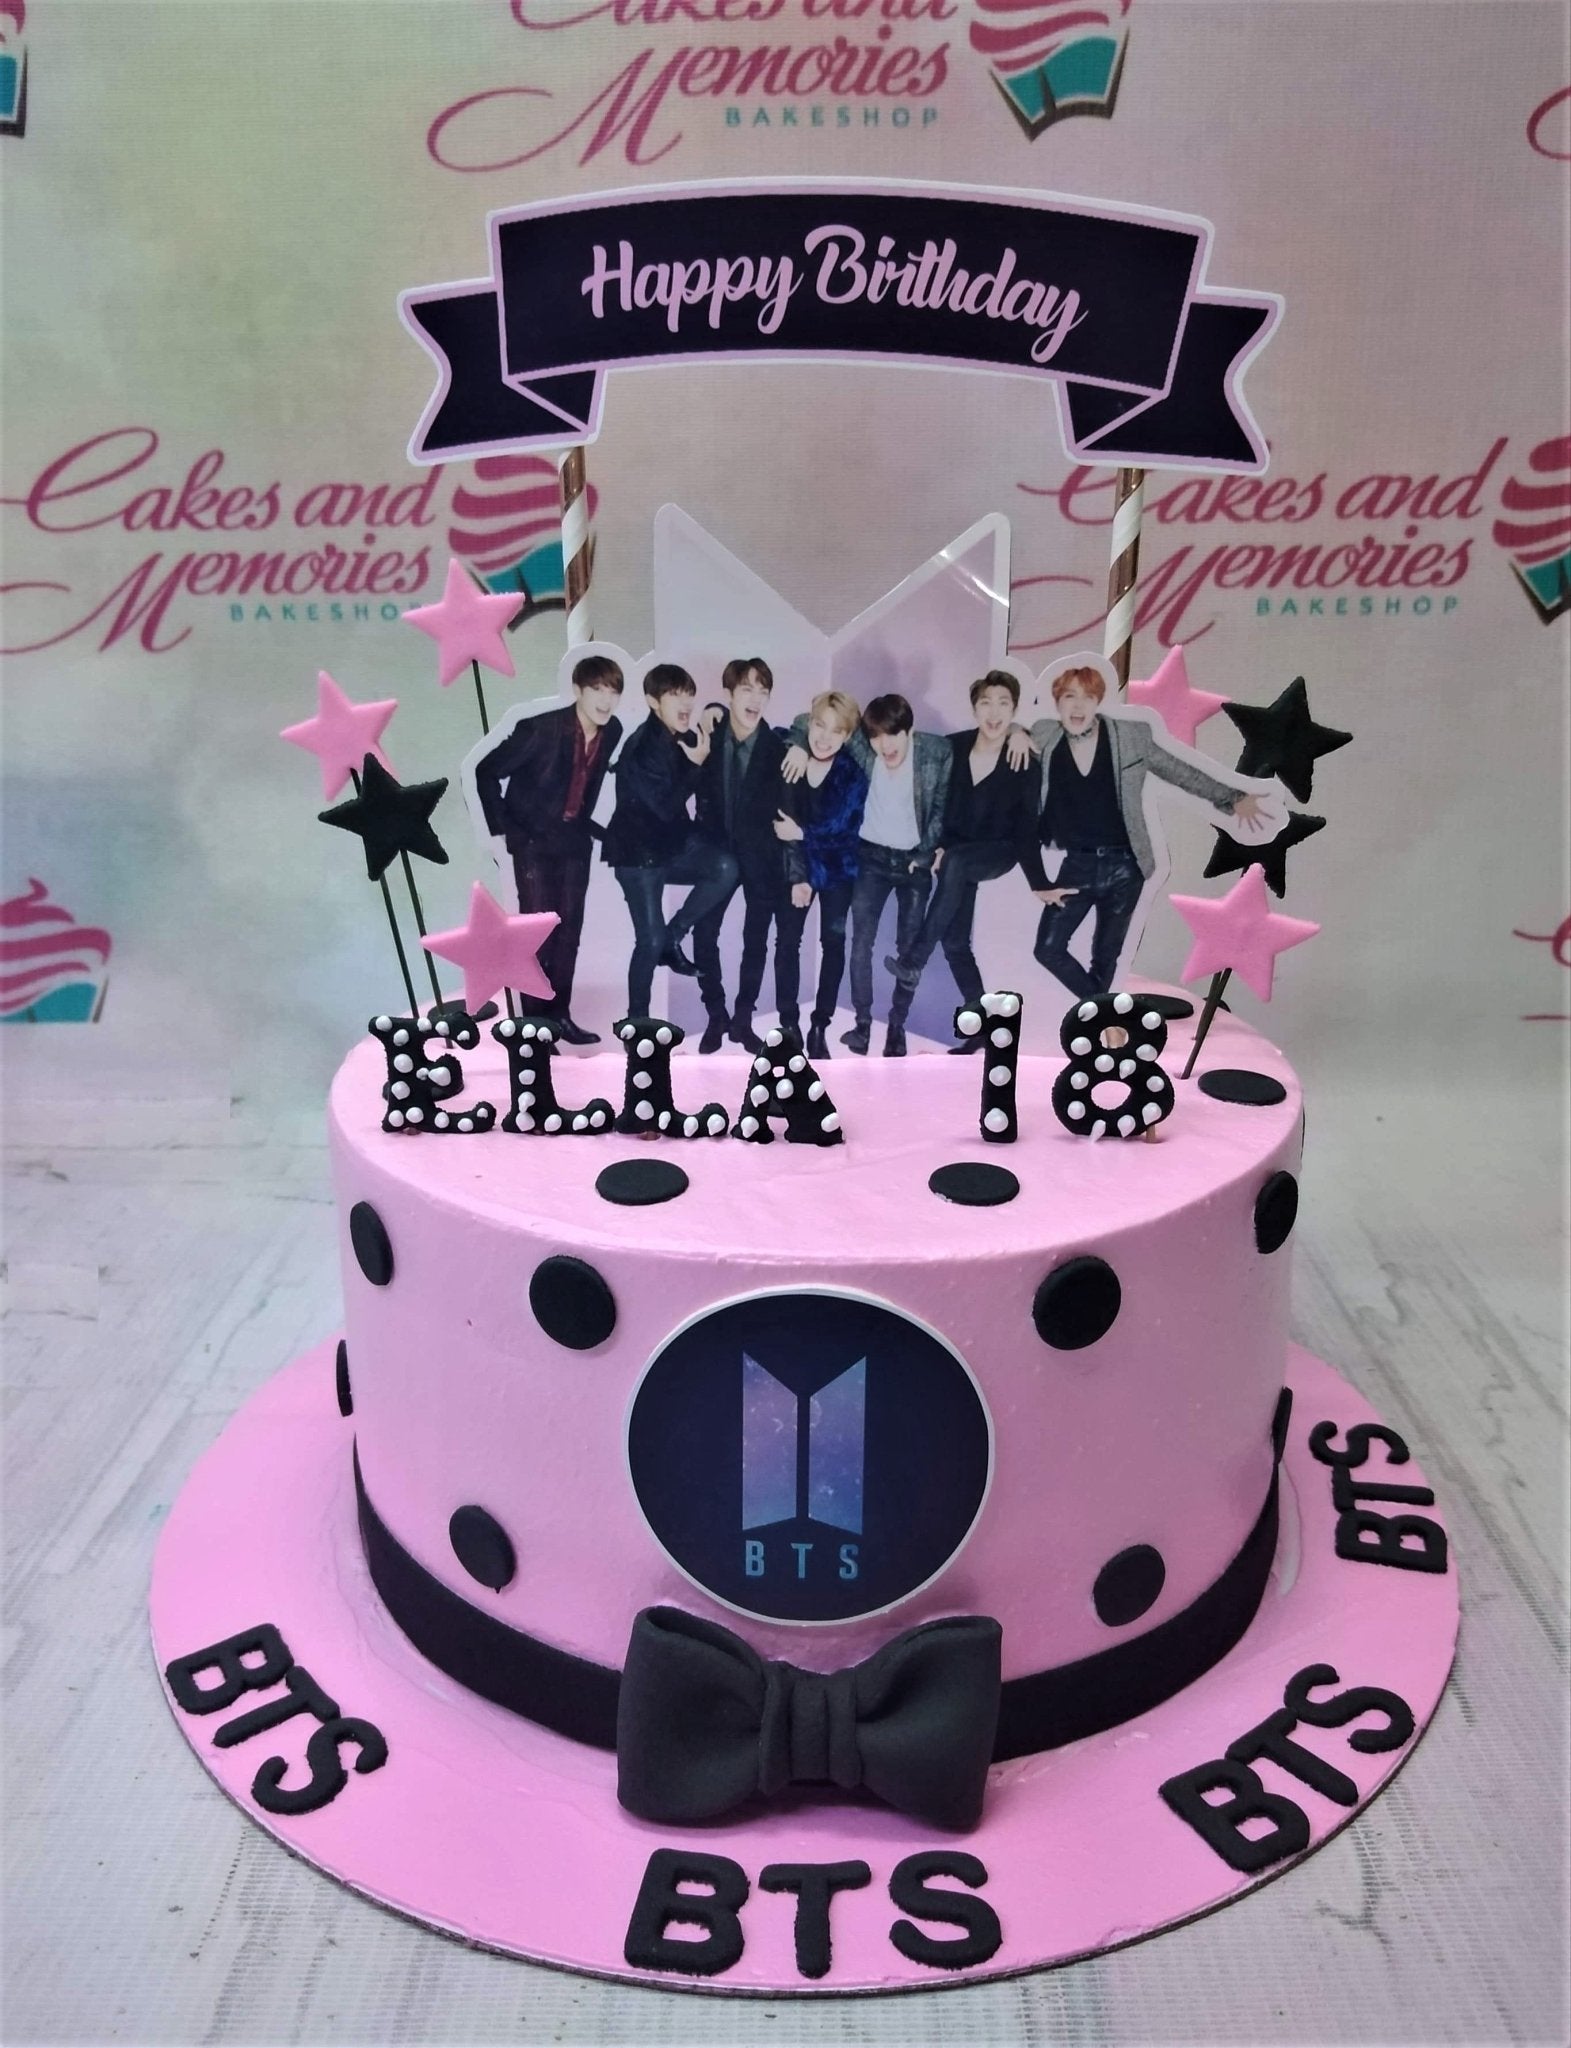 BTS Birthday Cake | Bts cake, Bts birthdays, Cake designs birthday